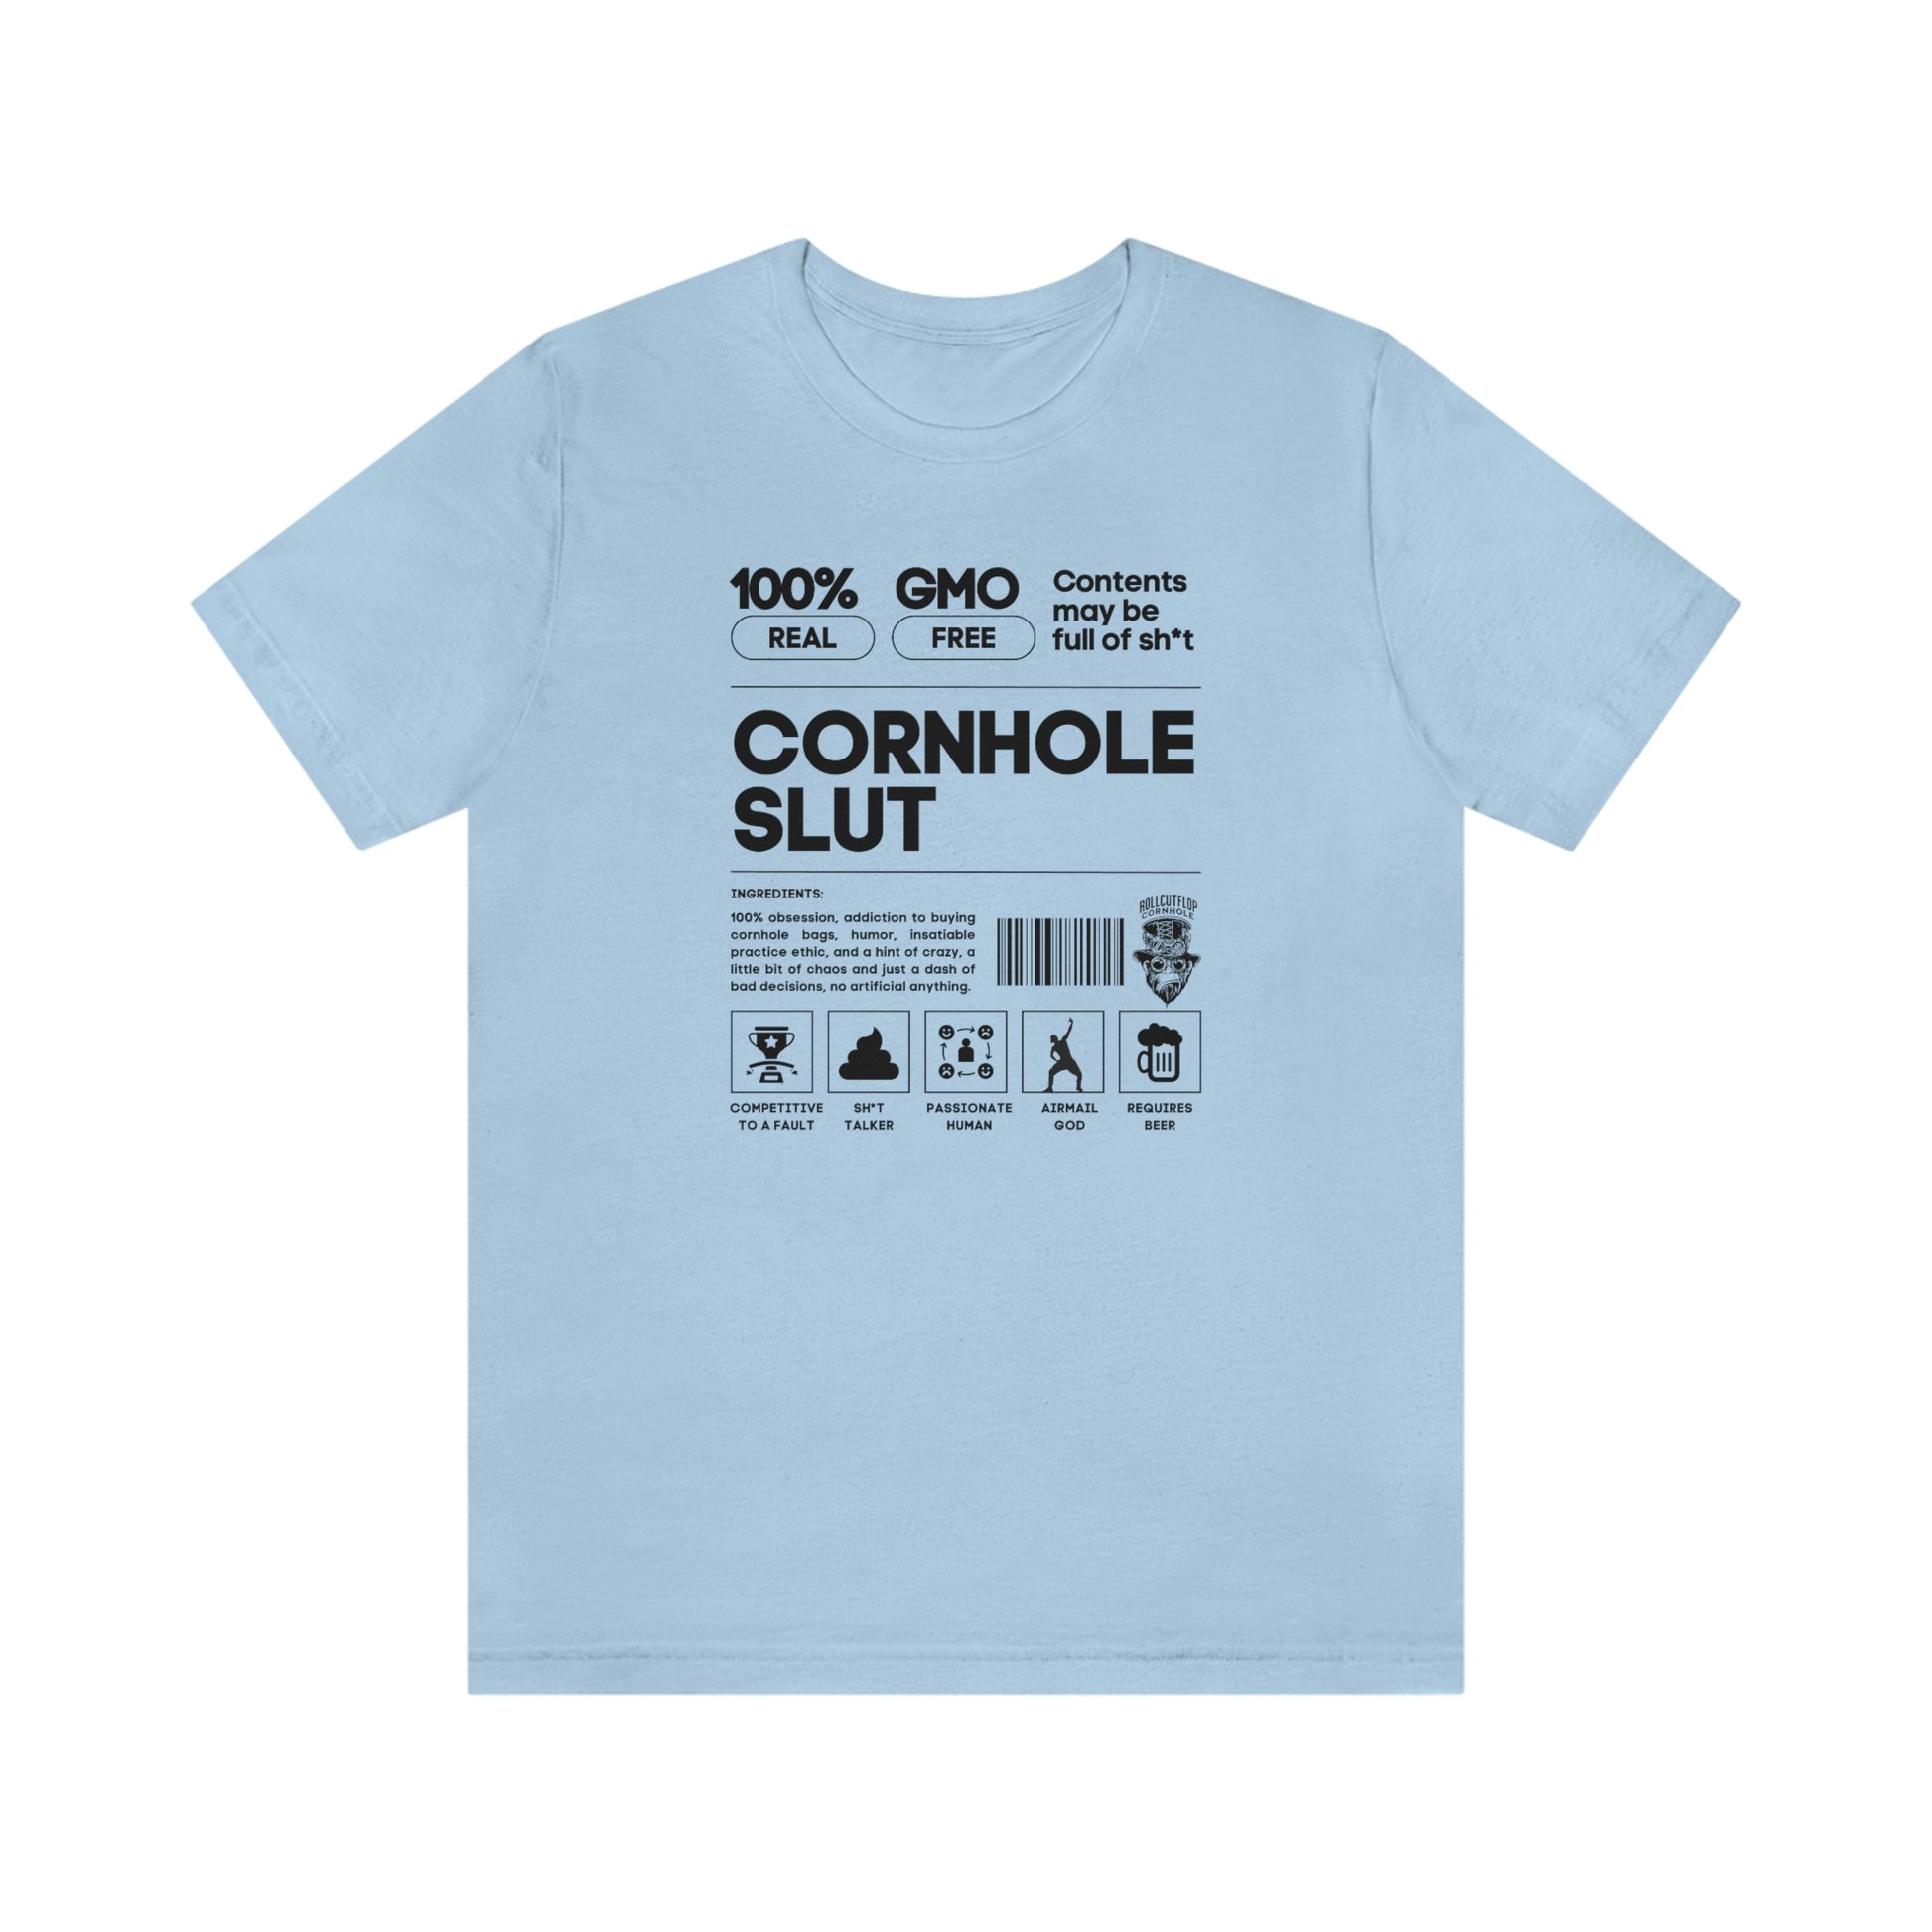 Cornhole Slut Unisex Jersey Sky Blue Tee - Cornhole Obsession Label & Roll Cut Flop Cornhole Barcode